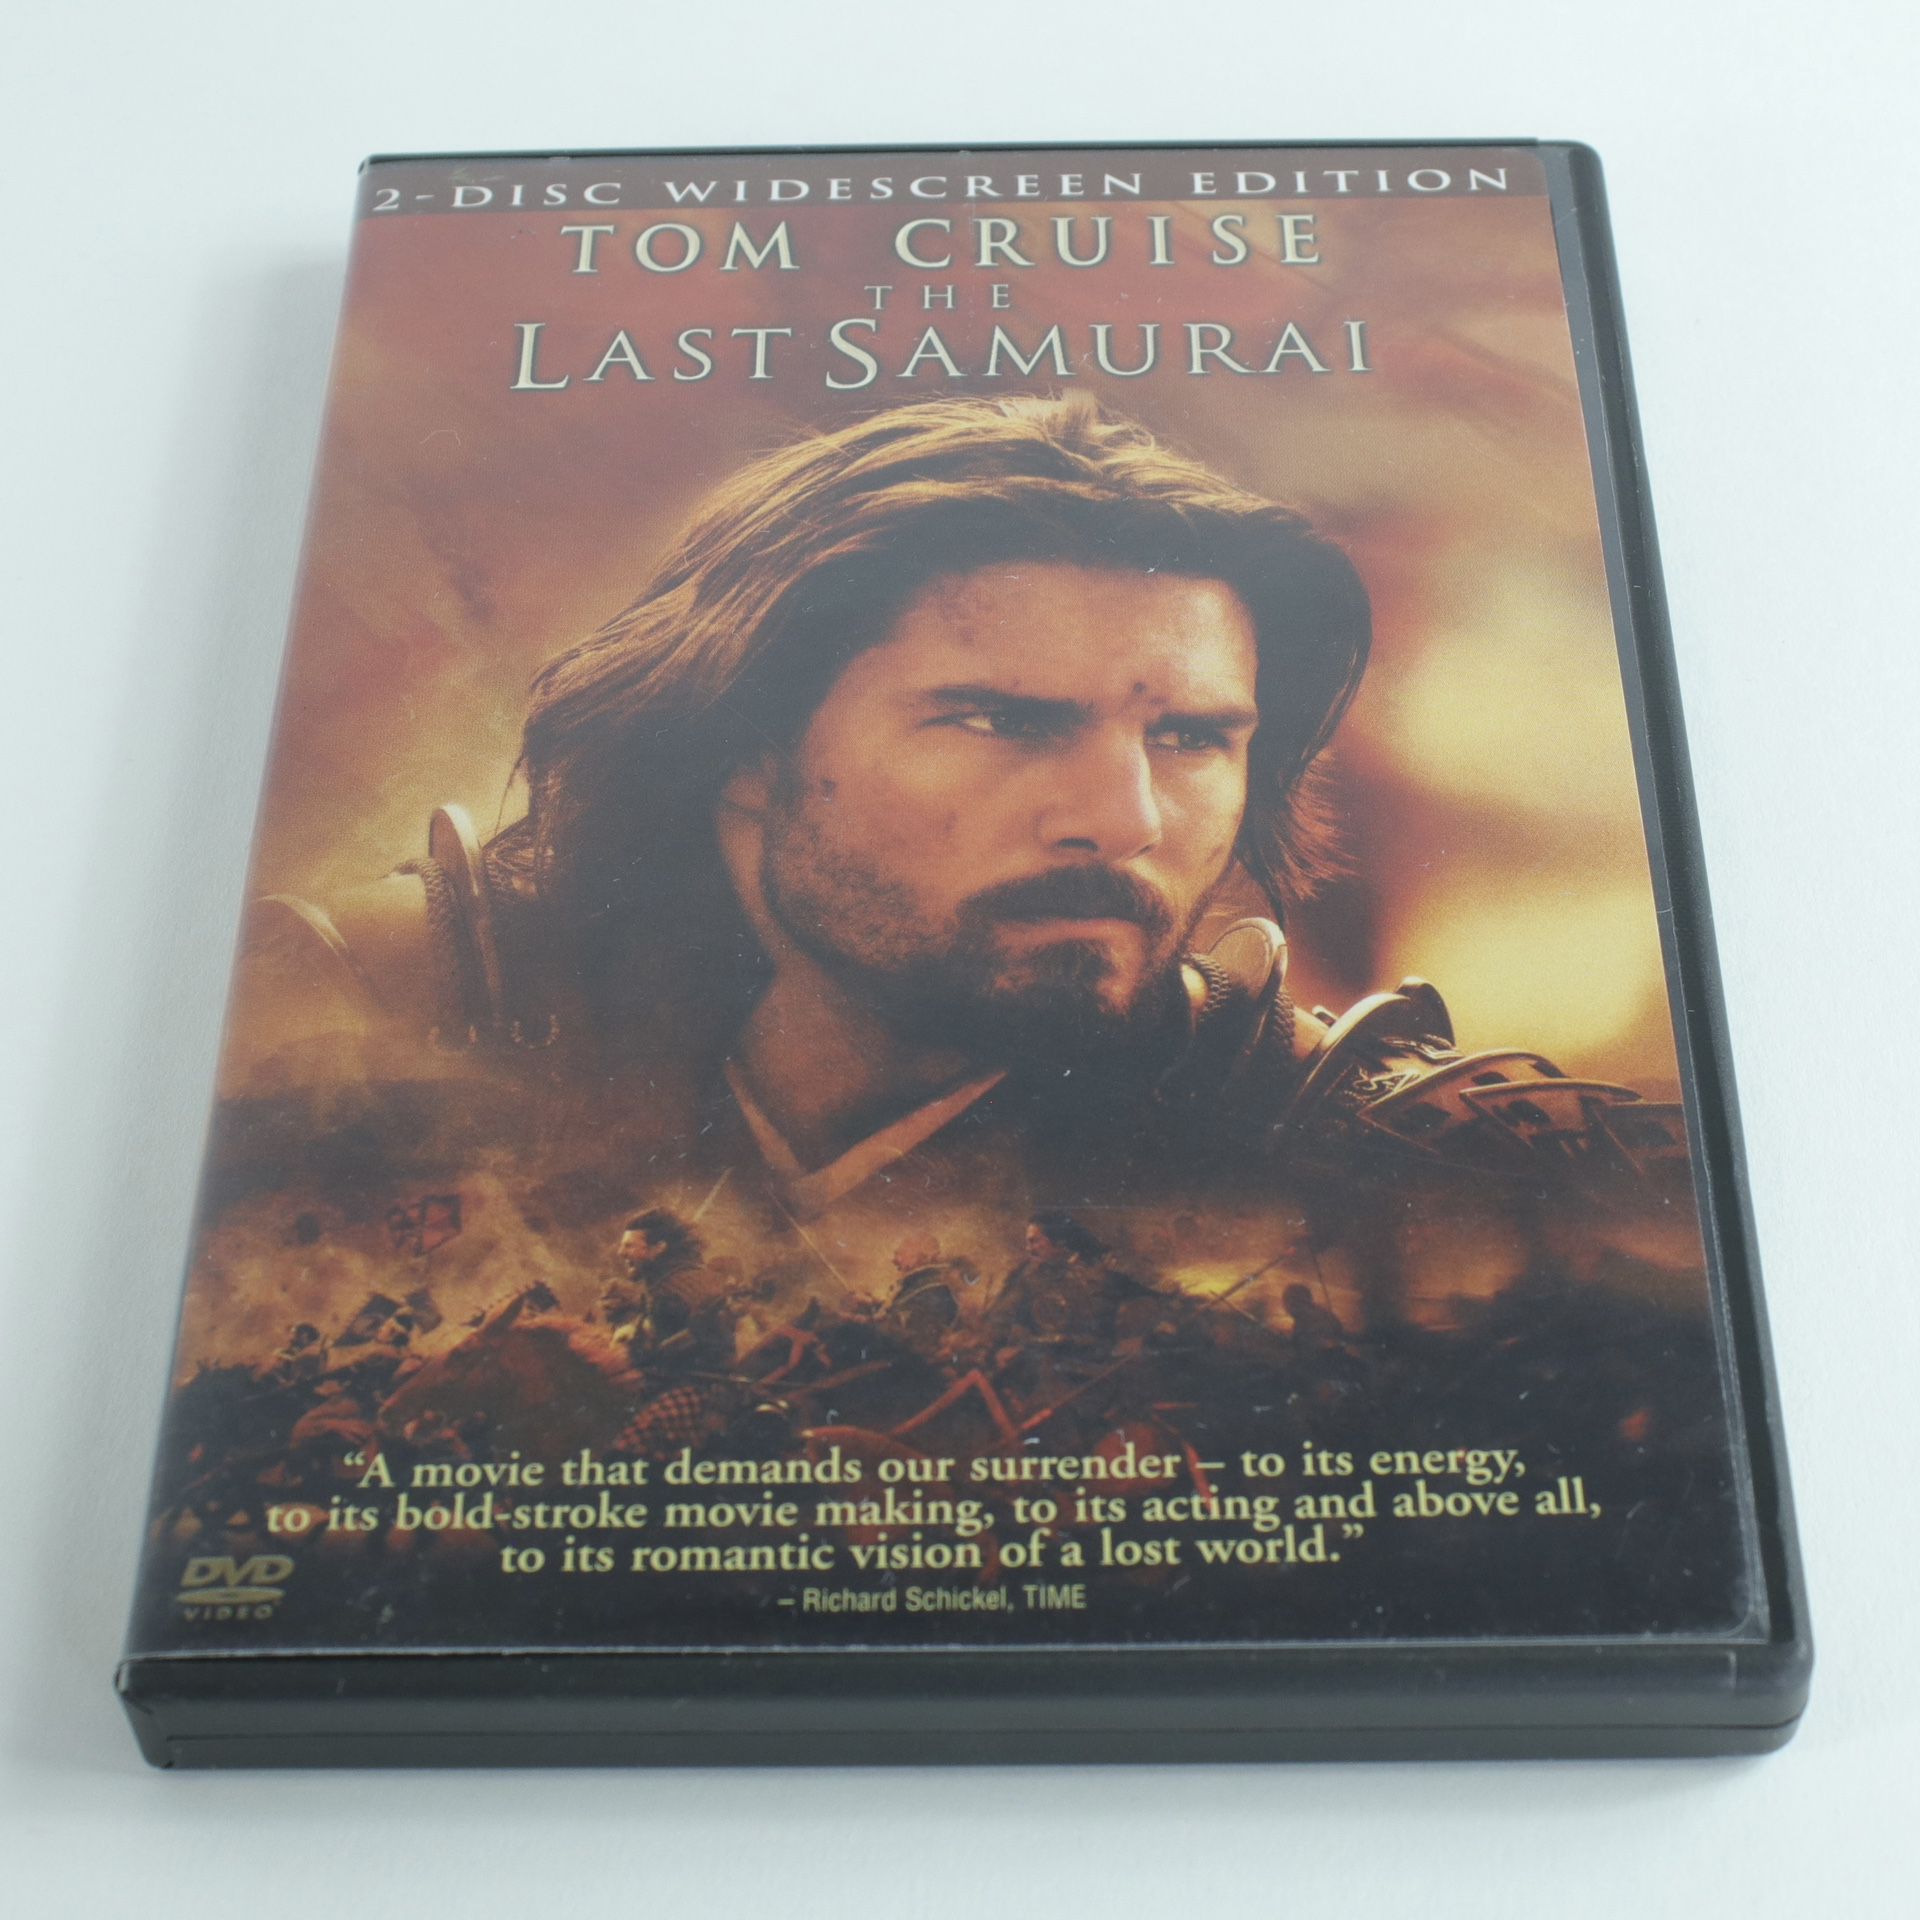 The Last Samurai 2-Disc Widescreen Edition DVD Movie